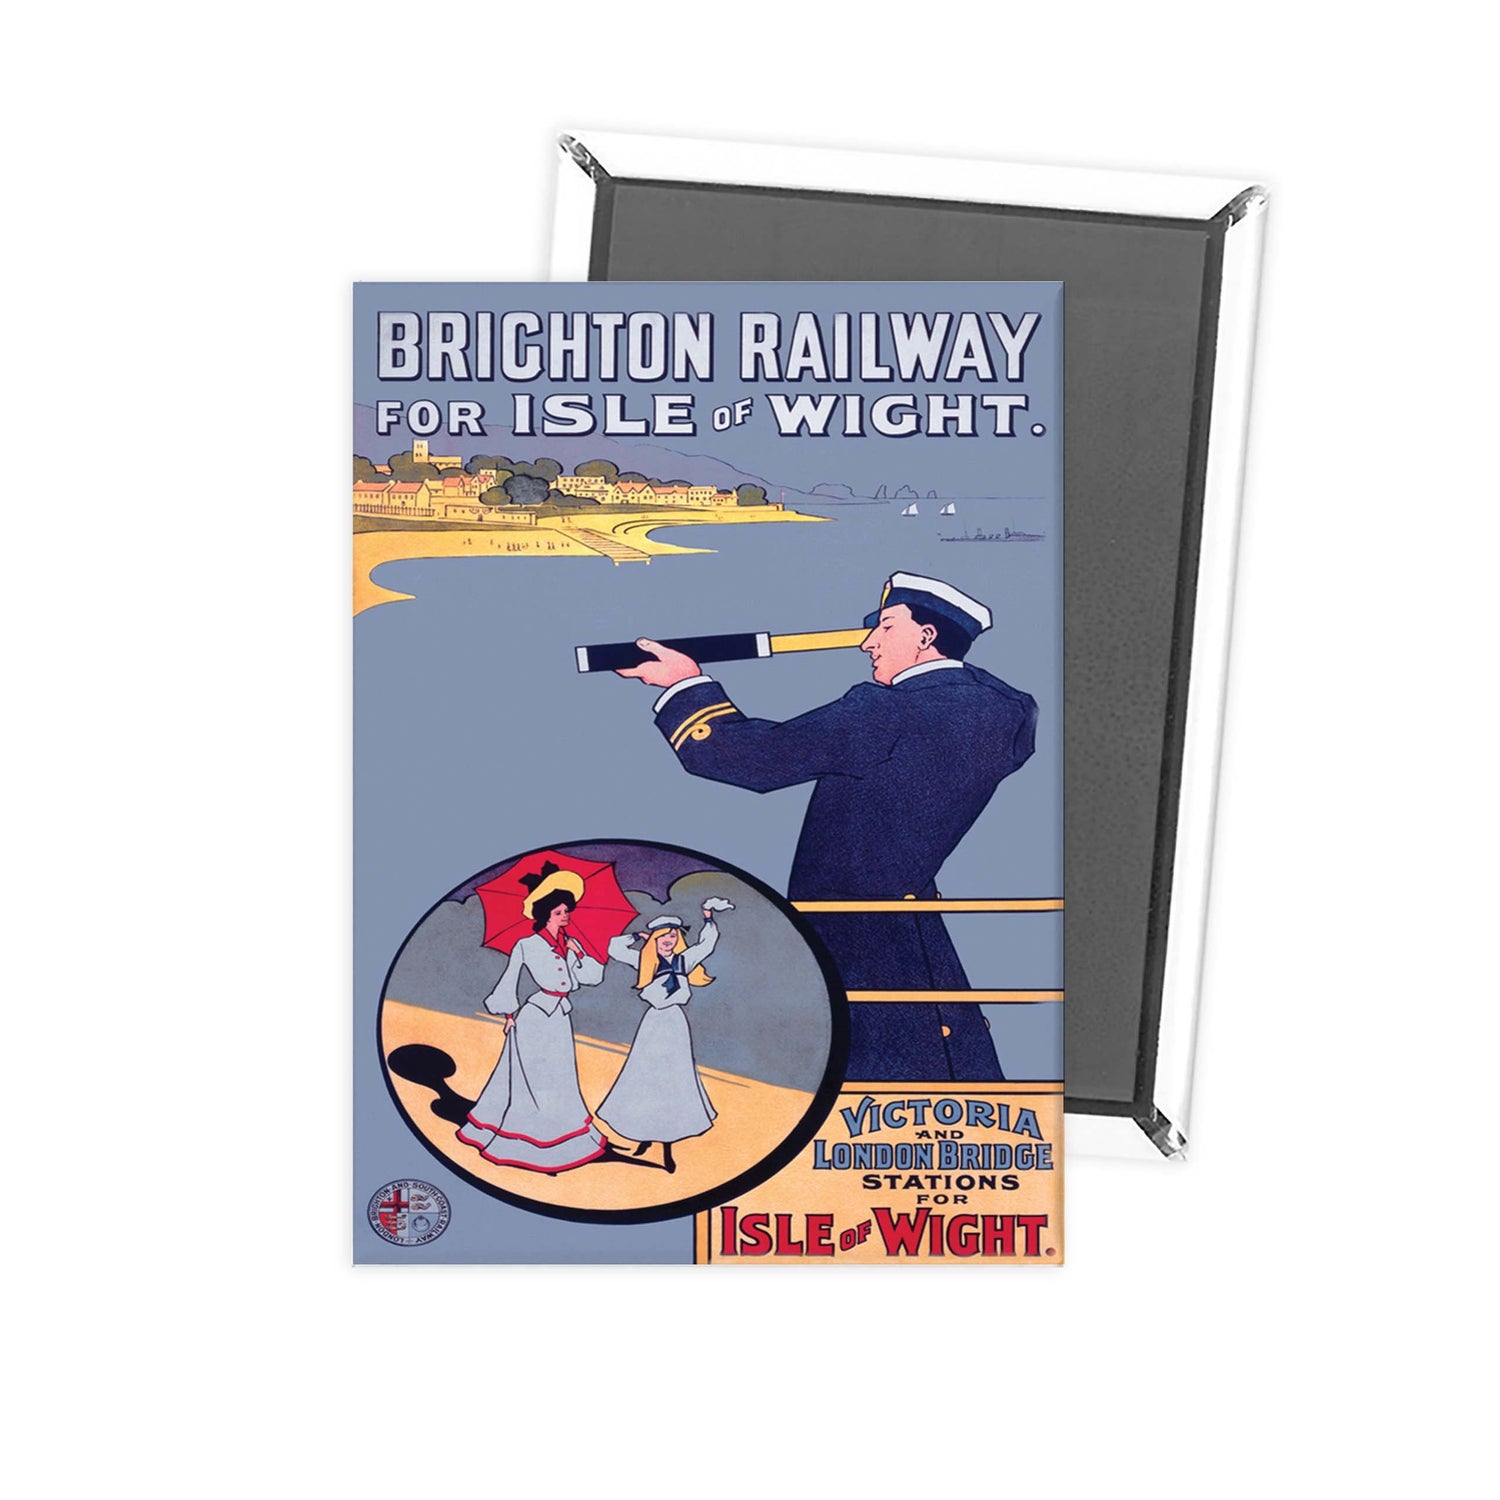 Off the coast of the Isle of Wight - Brighton Railway Fridge Magnet